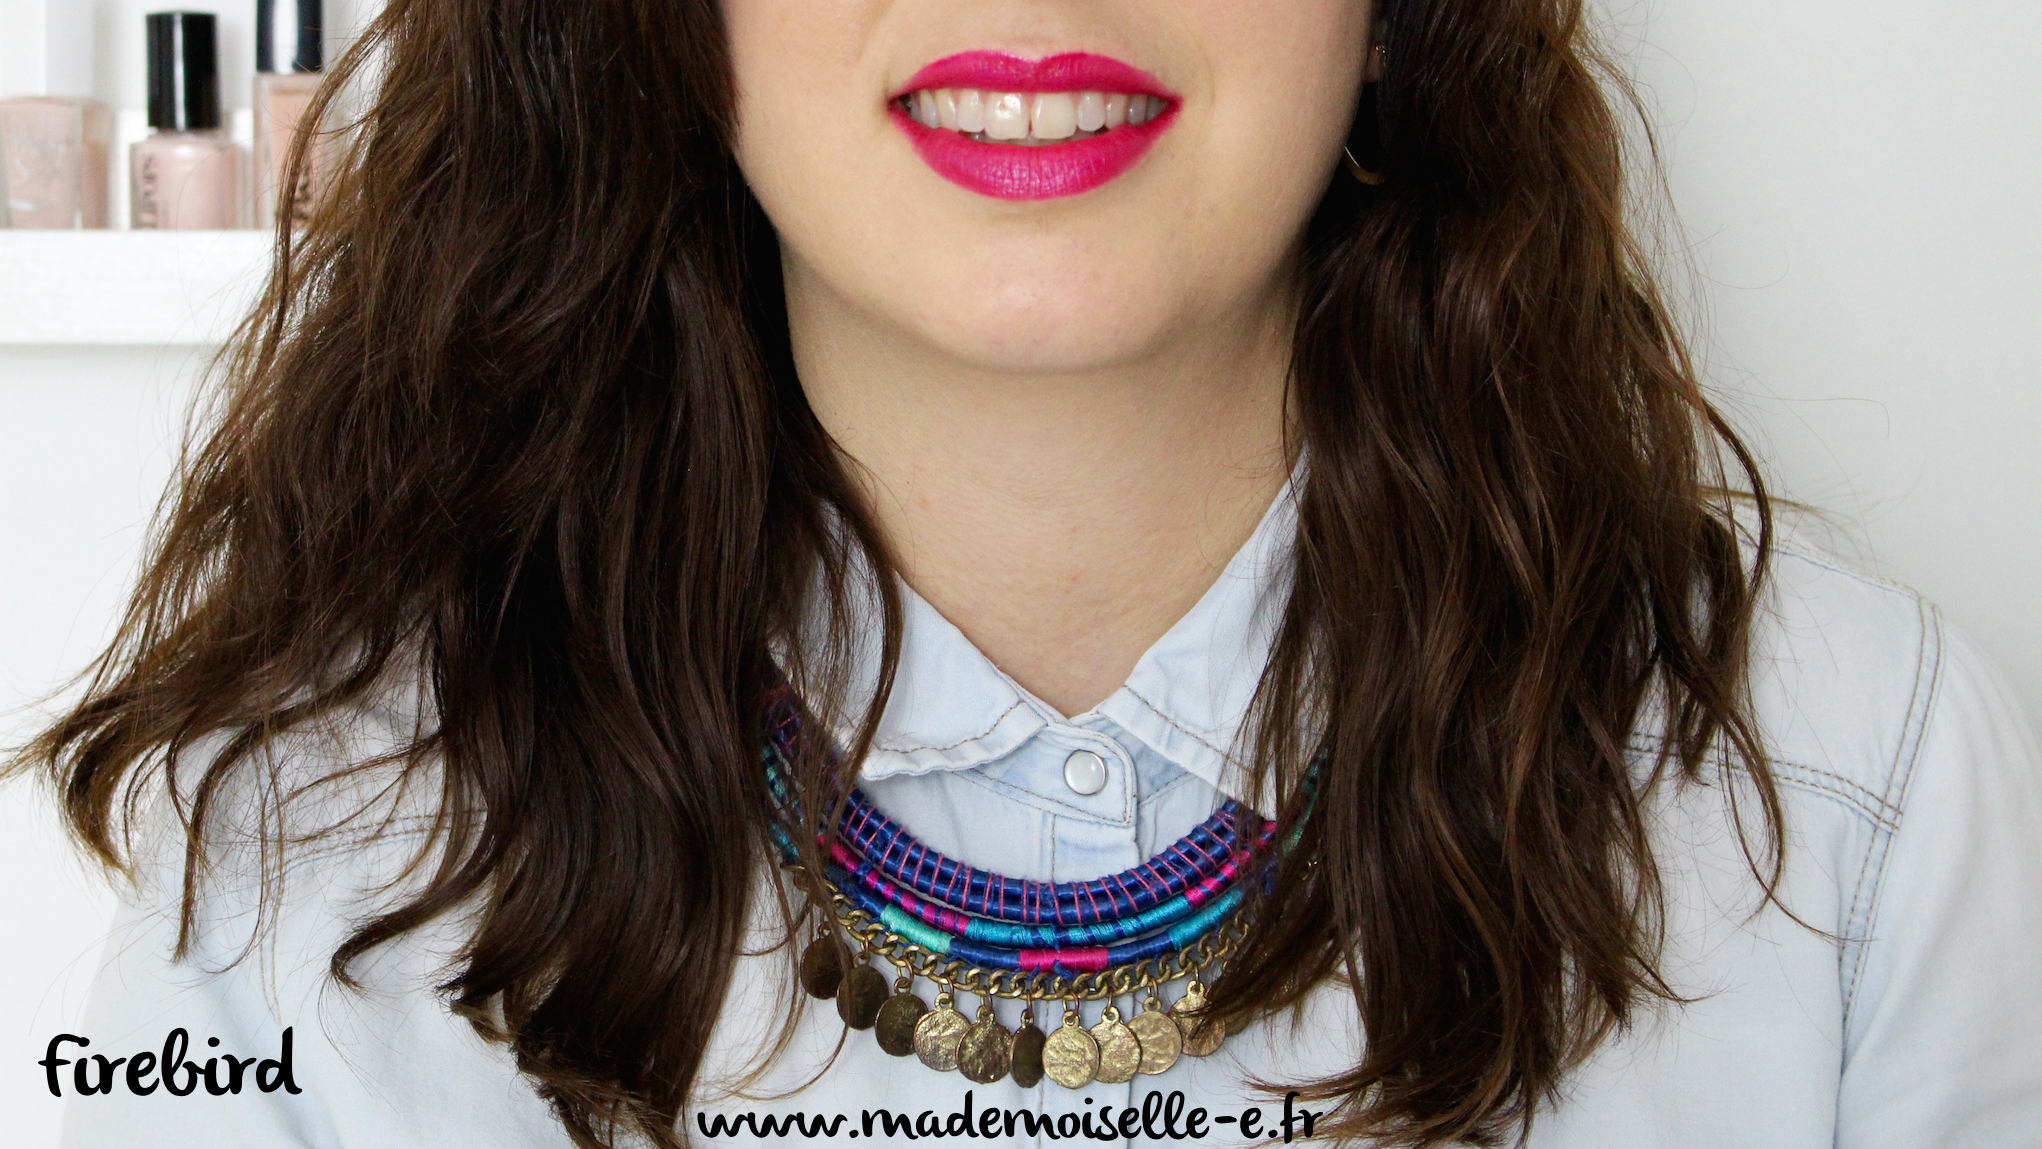 lipstick_vice_firebird_mademoiselle-e